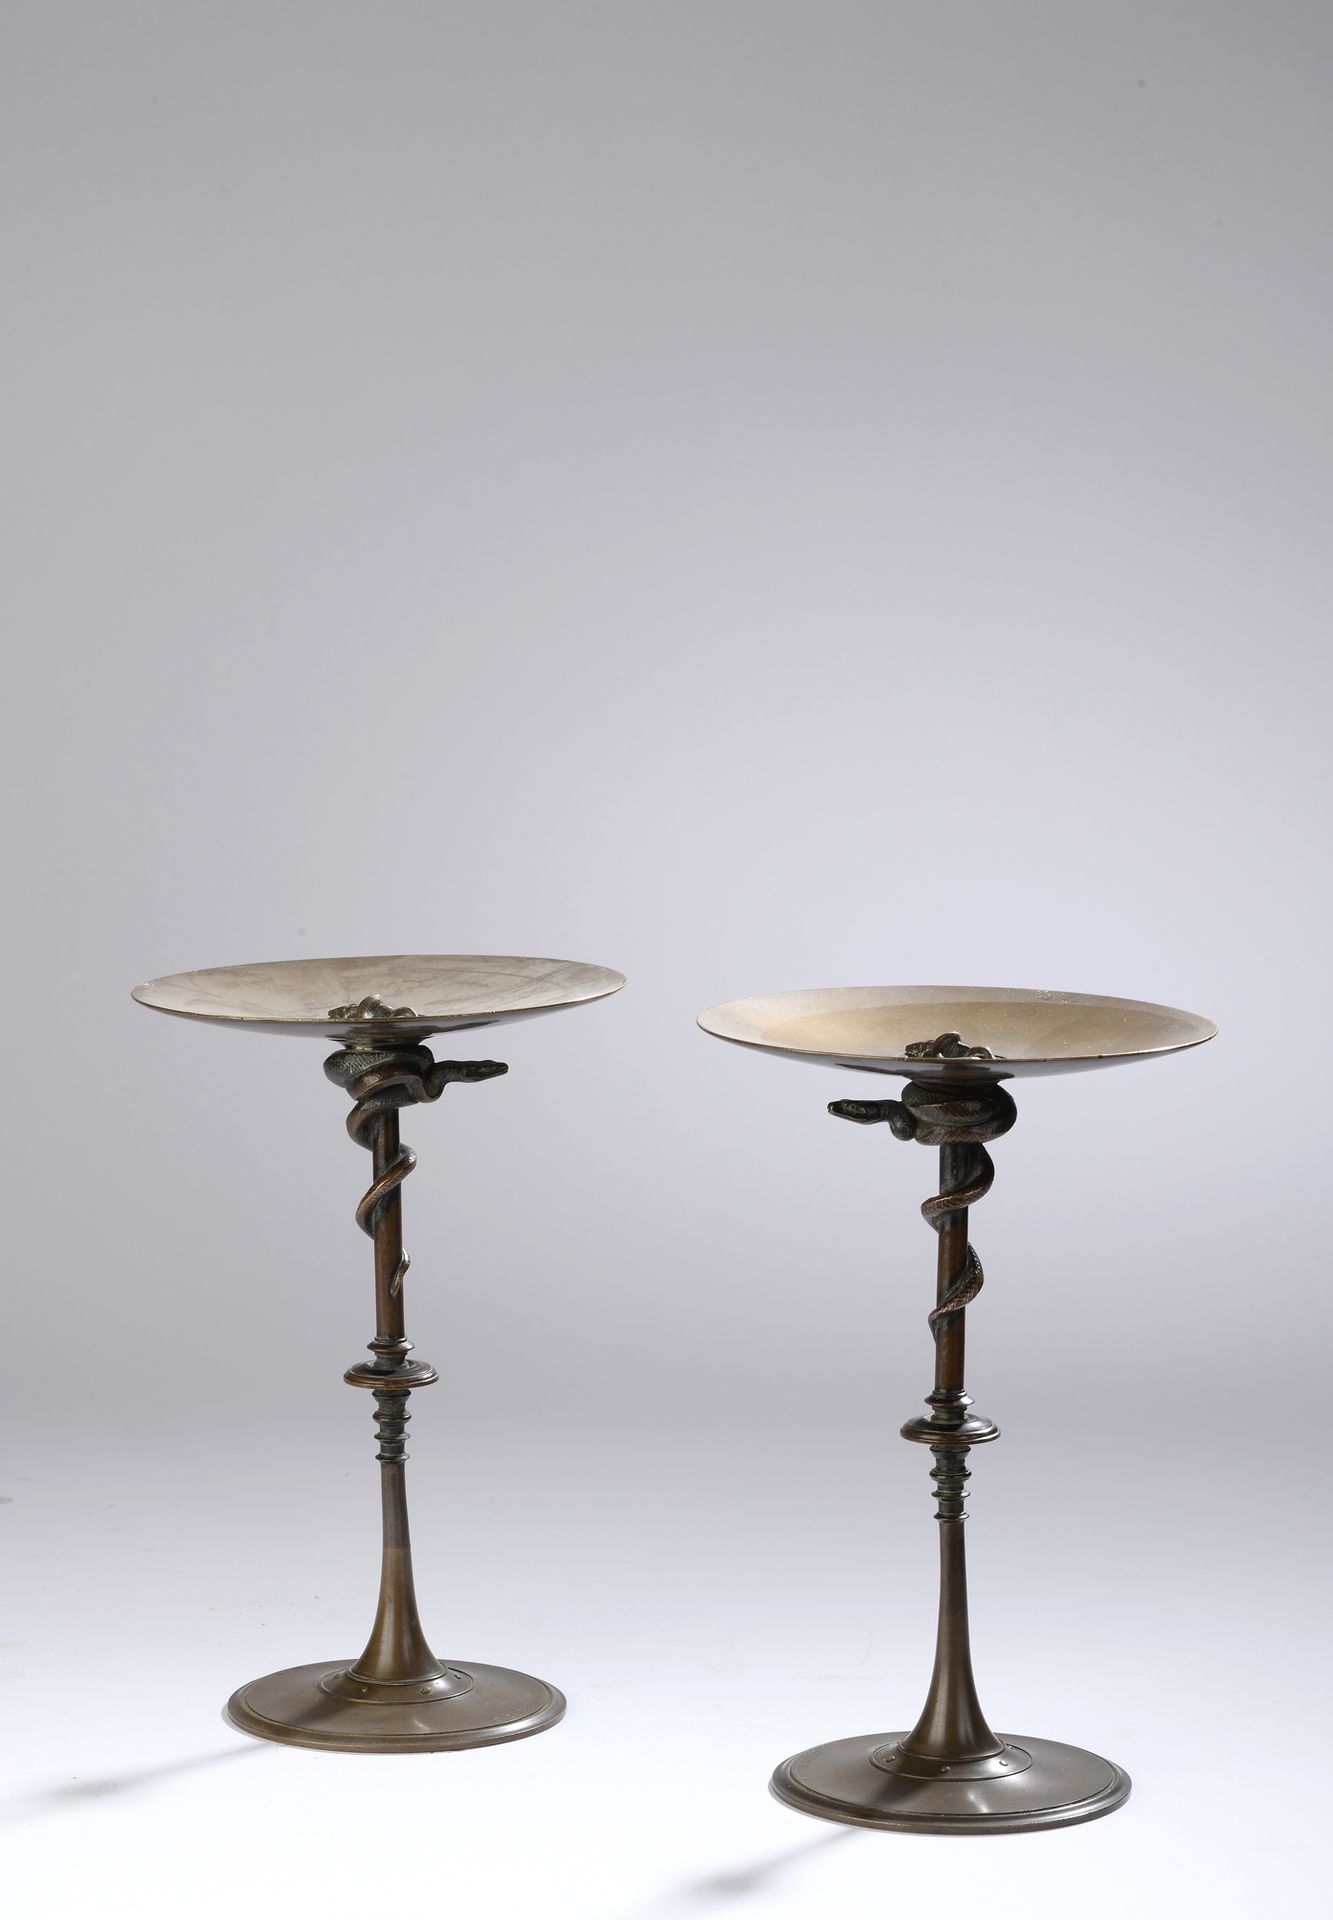 Null 费迪南德-巴贝迪安（1810-1892 年）
一对蛇形杯 
棕色青铜器。
每个底部都标有出版商的名字。
H.长 18 厘米，宽 12 厘米